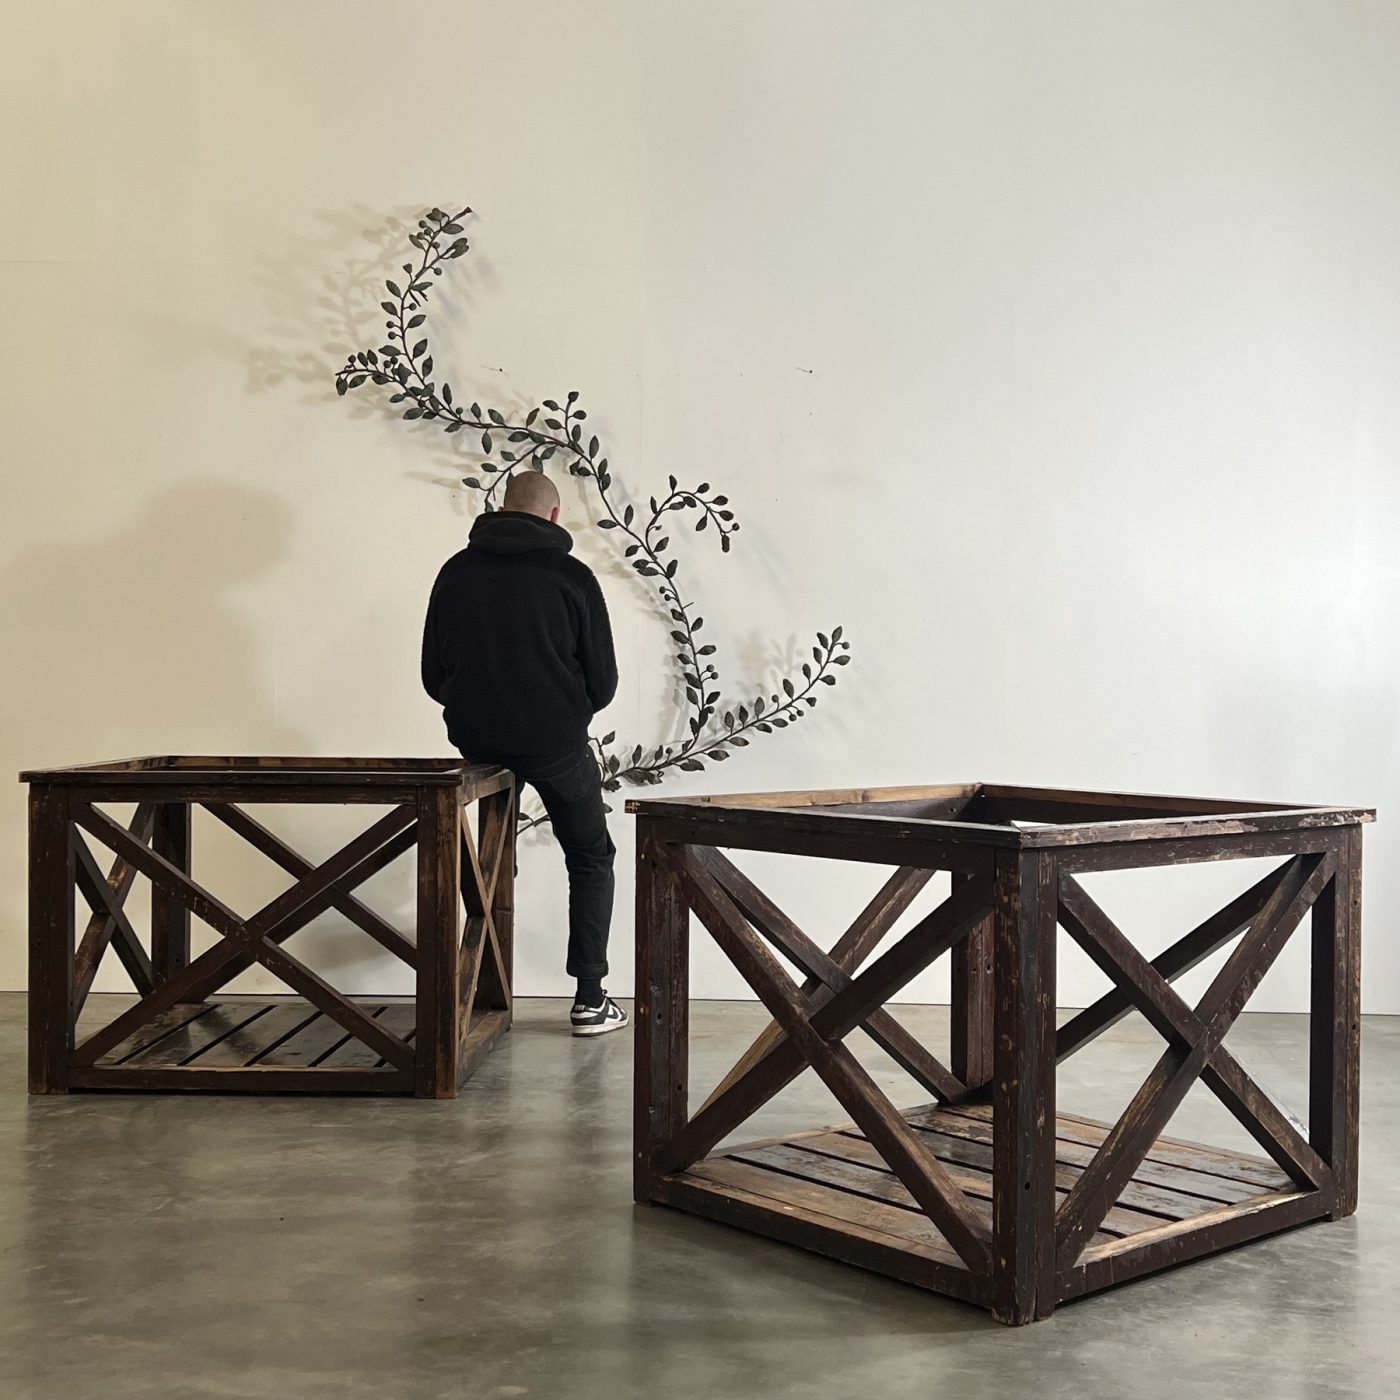 objet-vagabond-wooden-planters0009